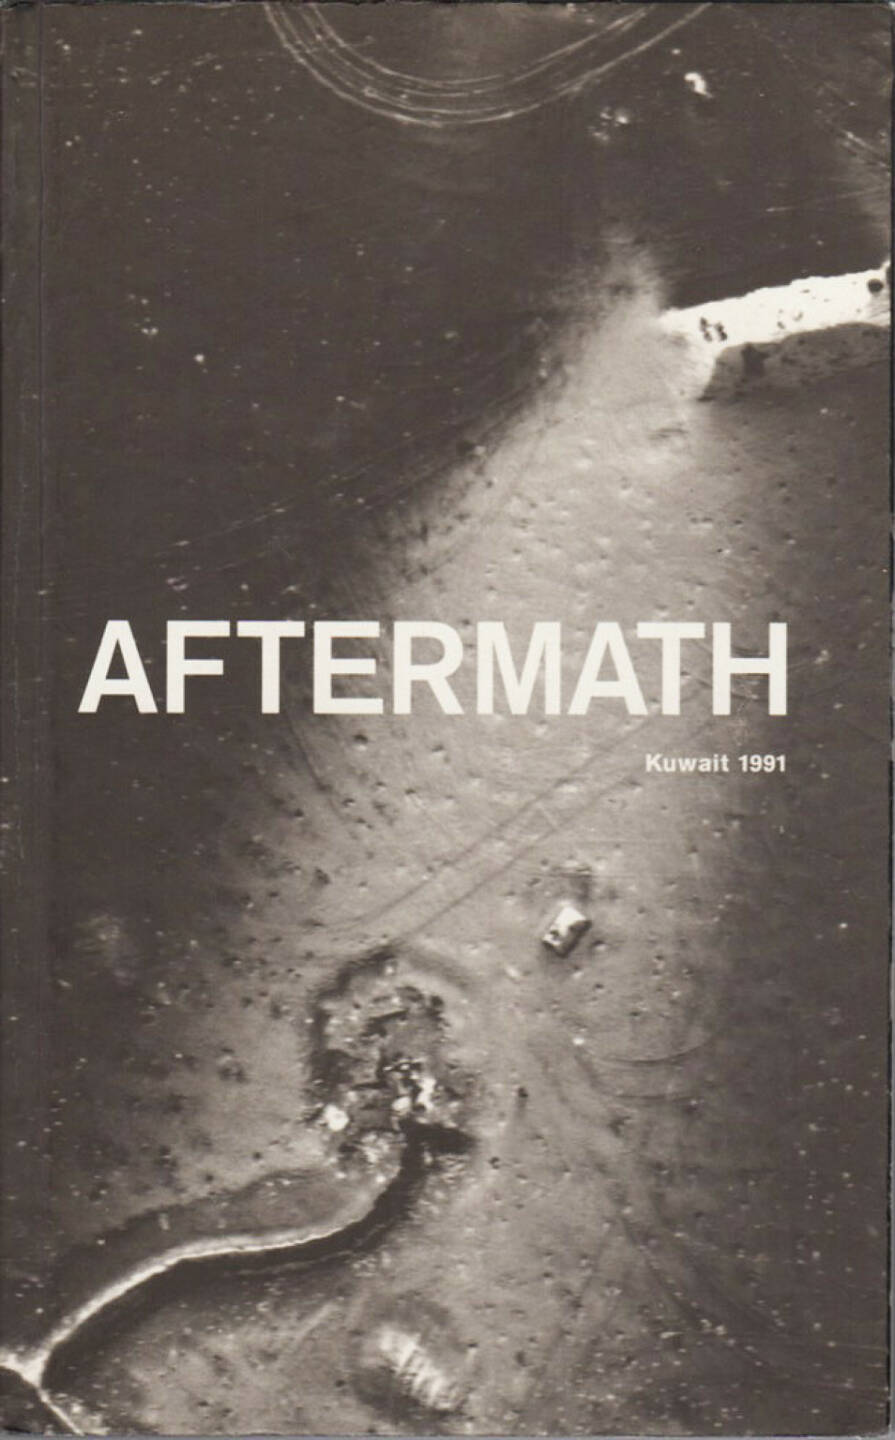 Sophie Ristelhueber - Aftermath: Kuwait, 1991, Thames and Hudson 1992, Cover - http://josefchladek.com/book/sophie_ristelhueber_-_aftermath_kuwait_1991